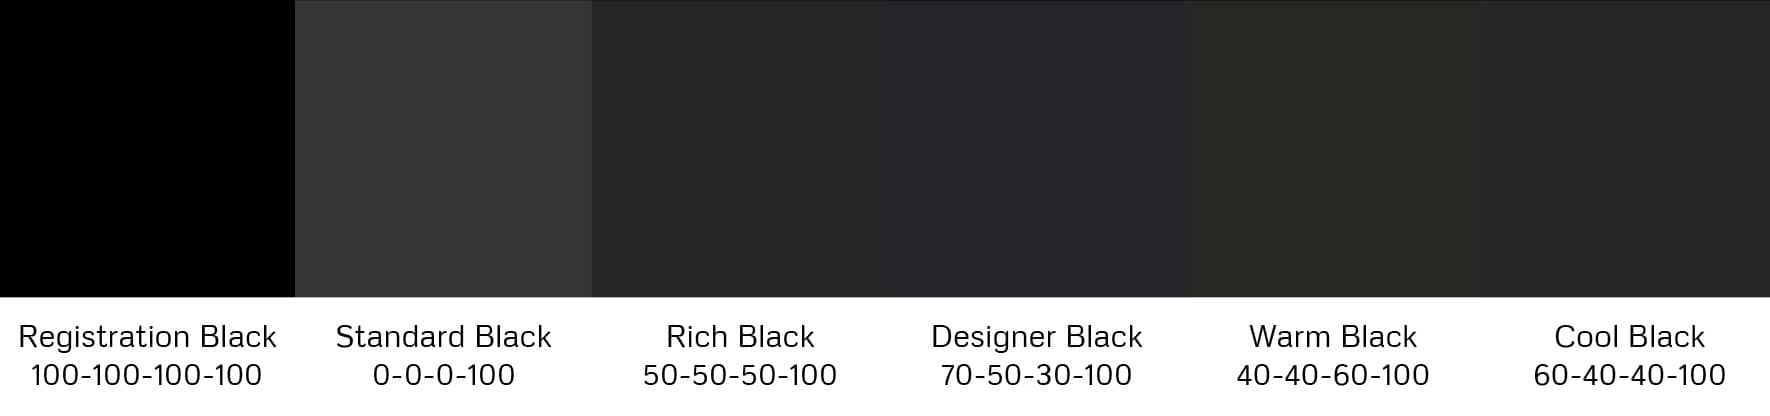 Registration Black vs Standard Black Black for Commercial Printing